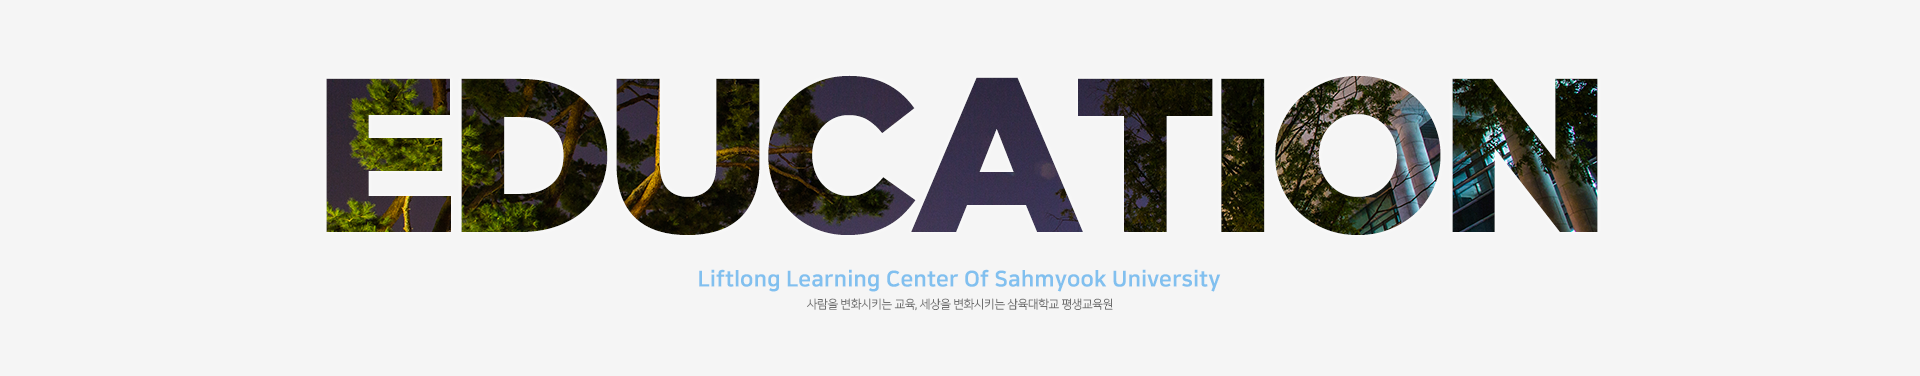 liftlong learning center of sahmyook university